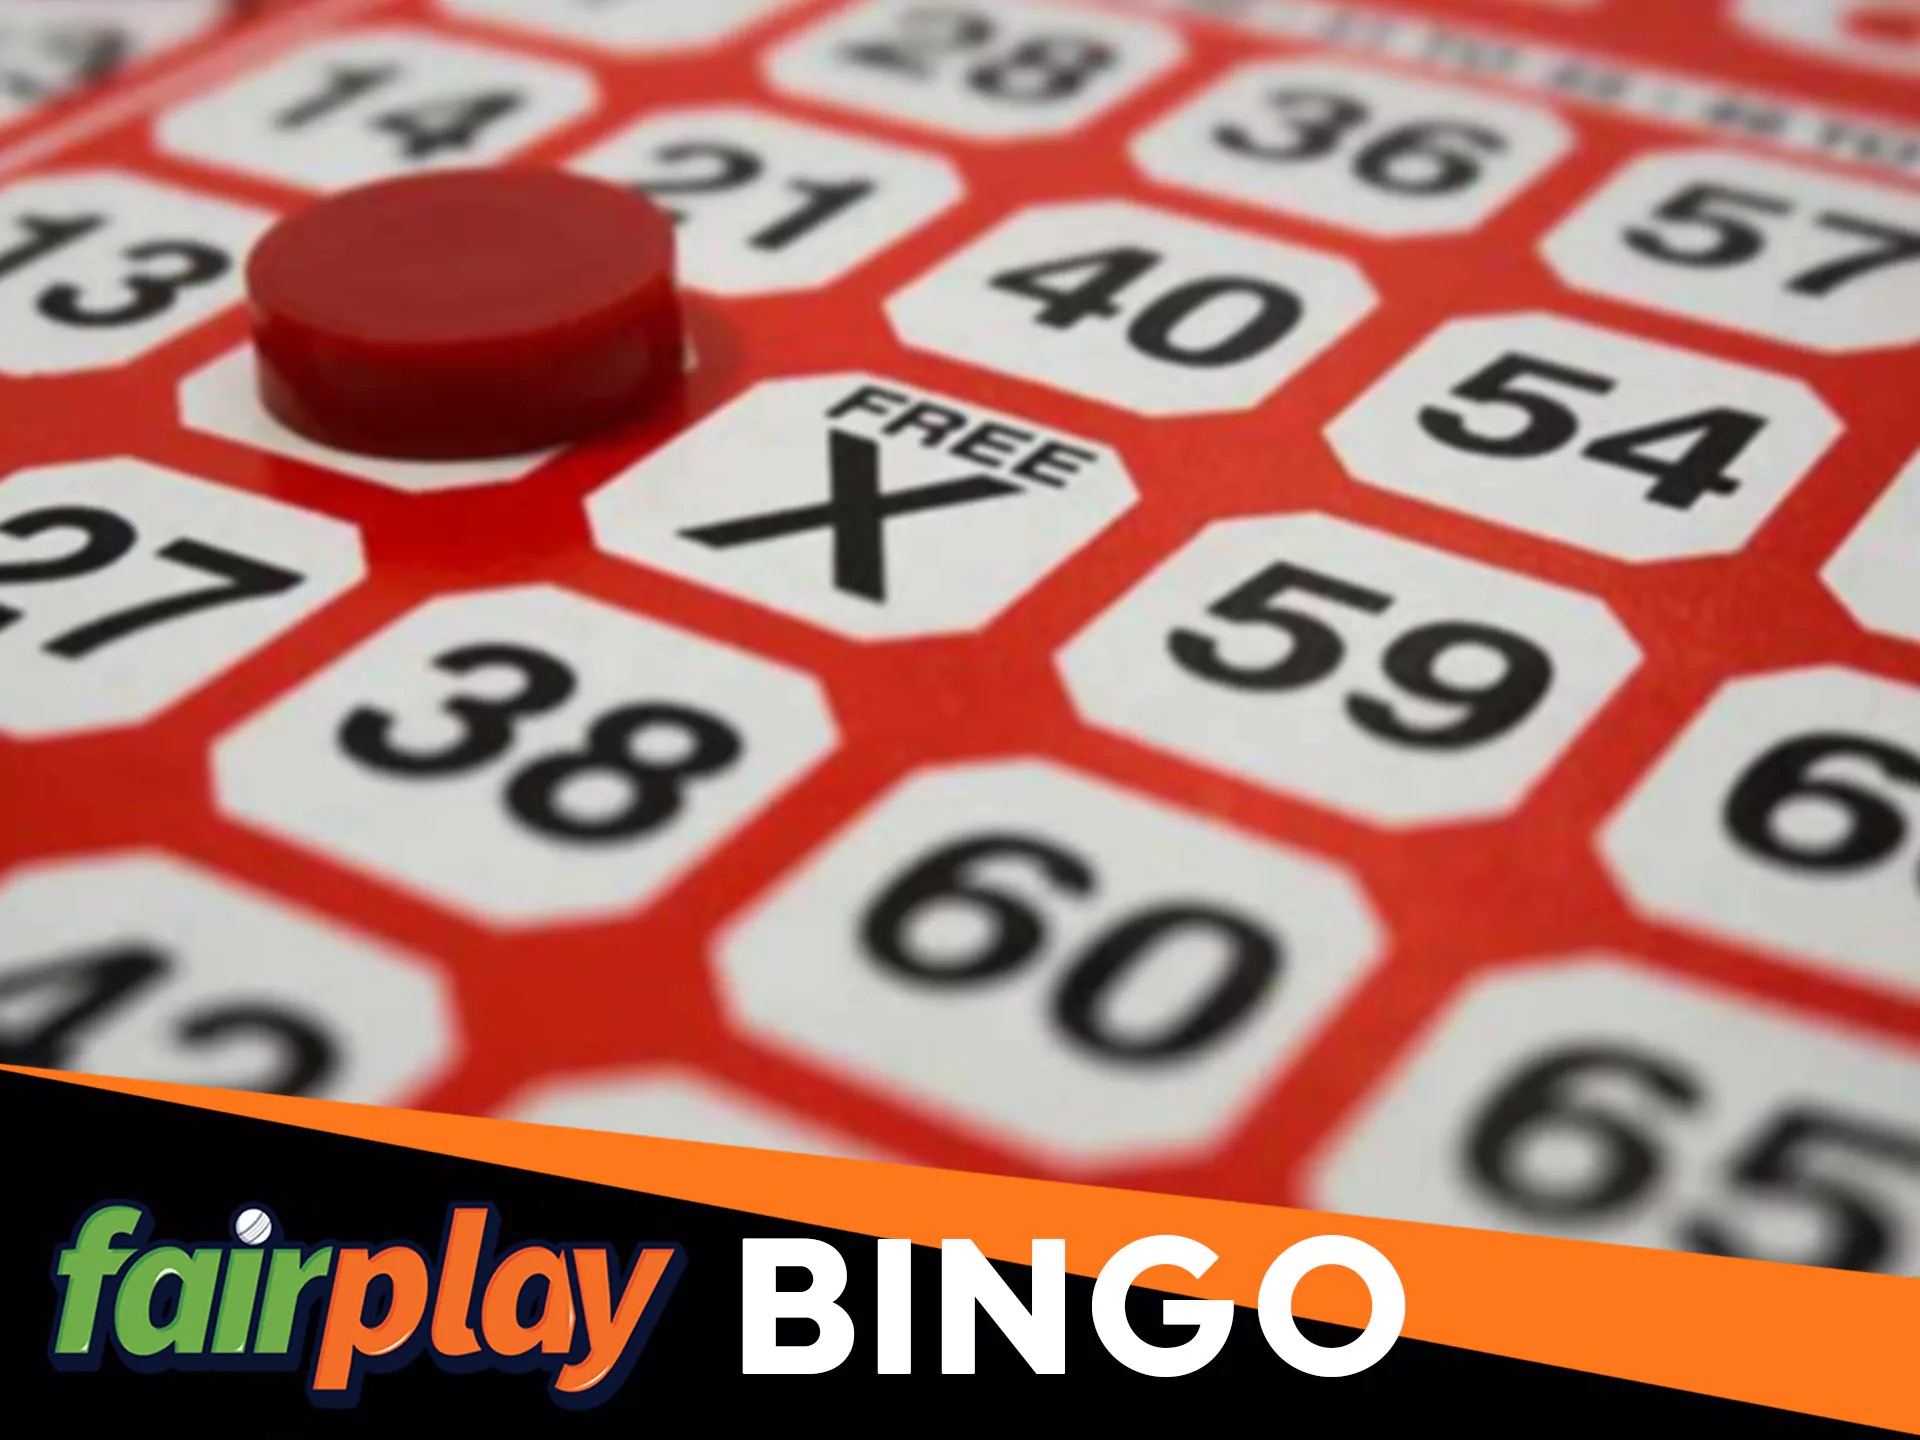 Play bingo at Fairplay.